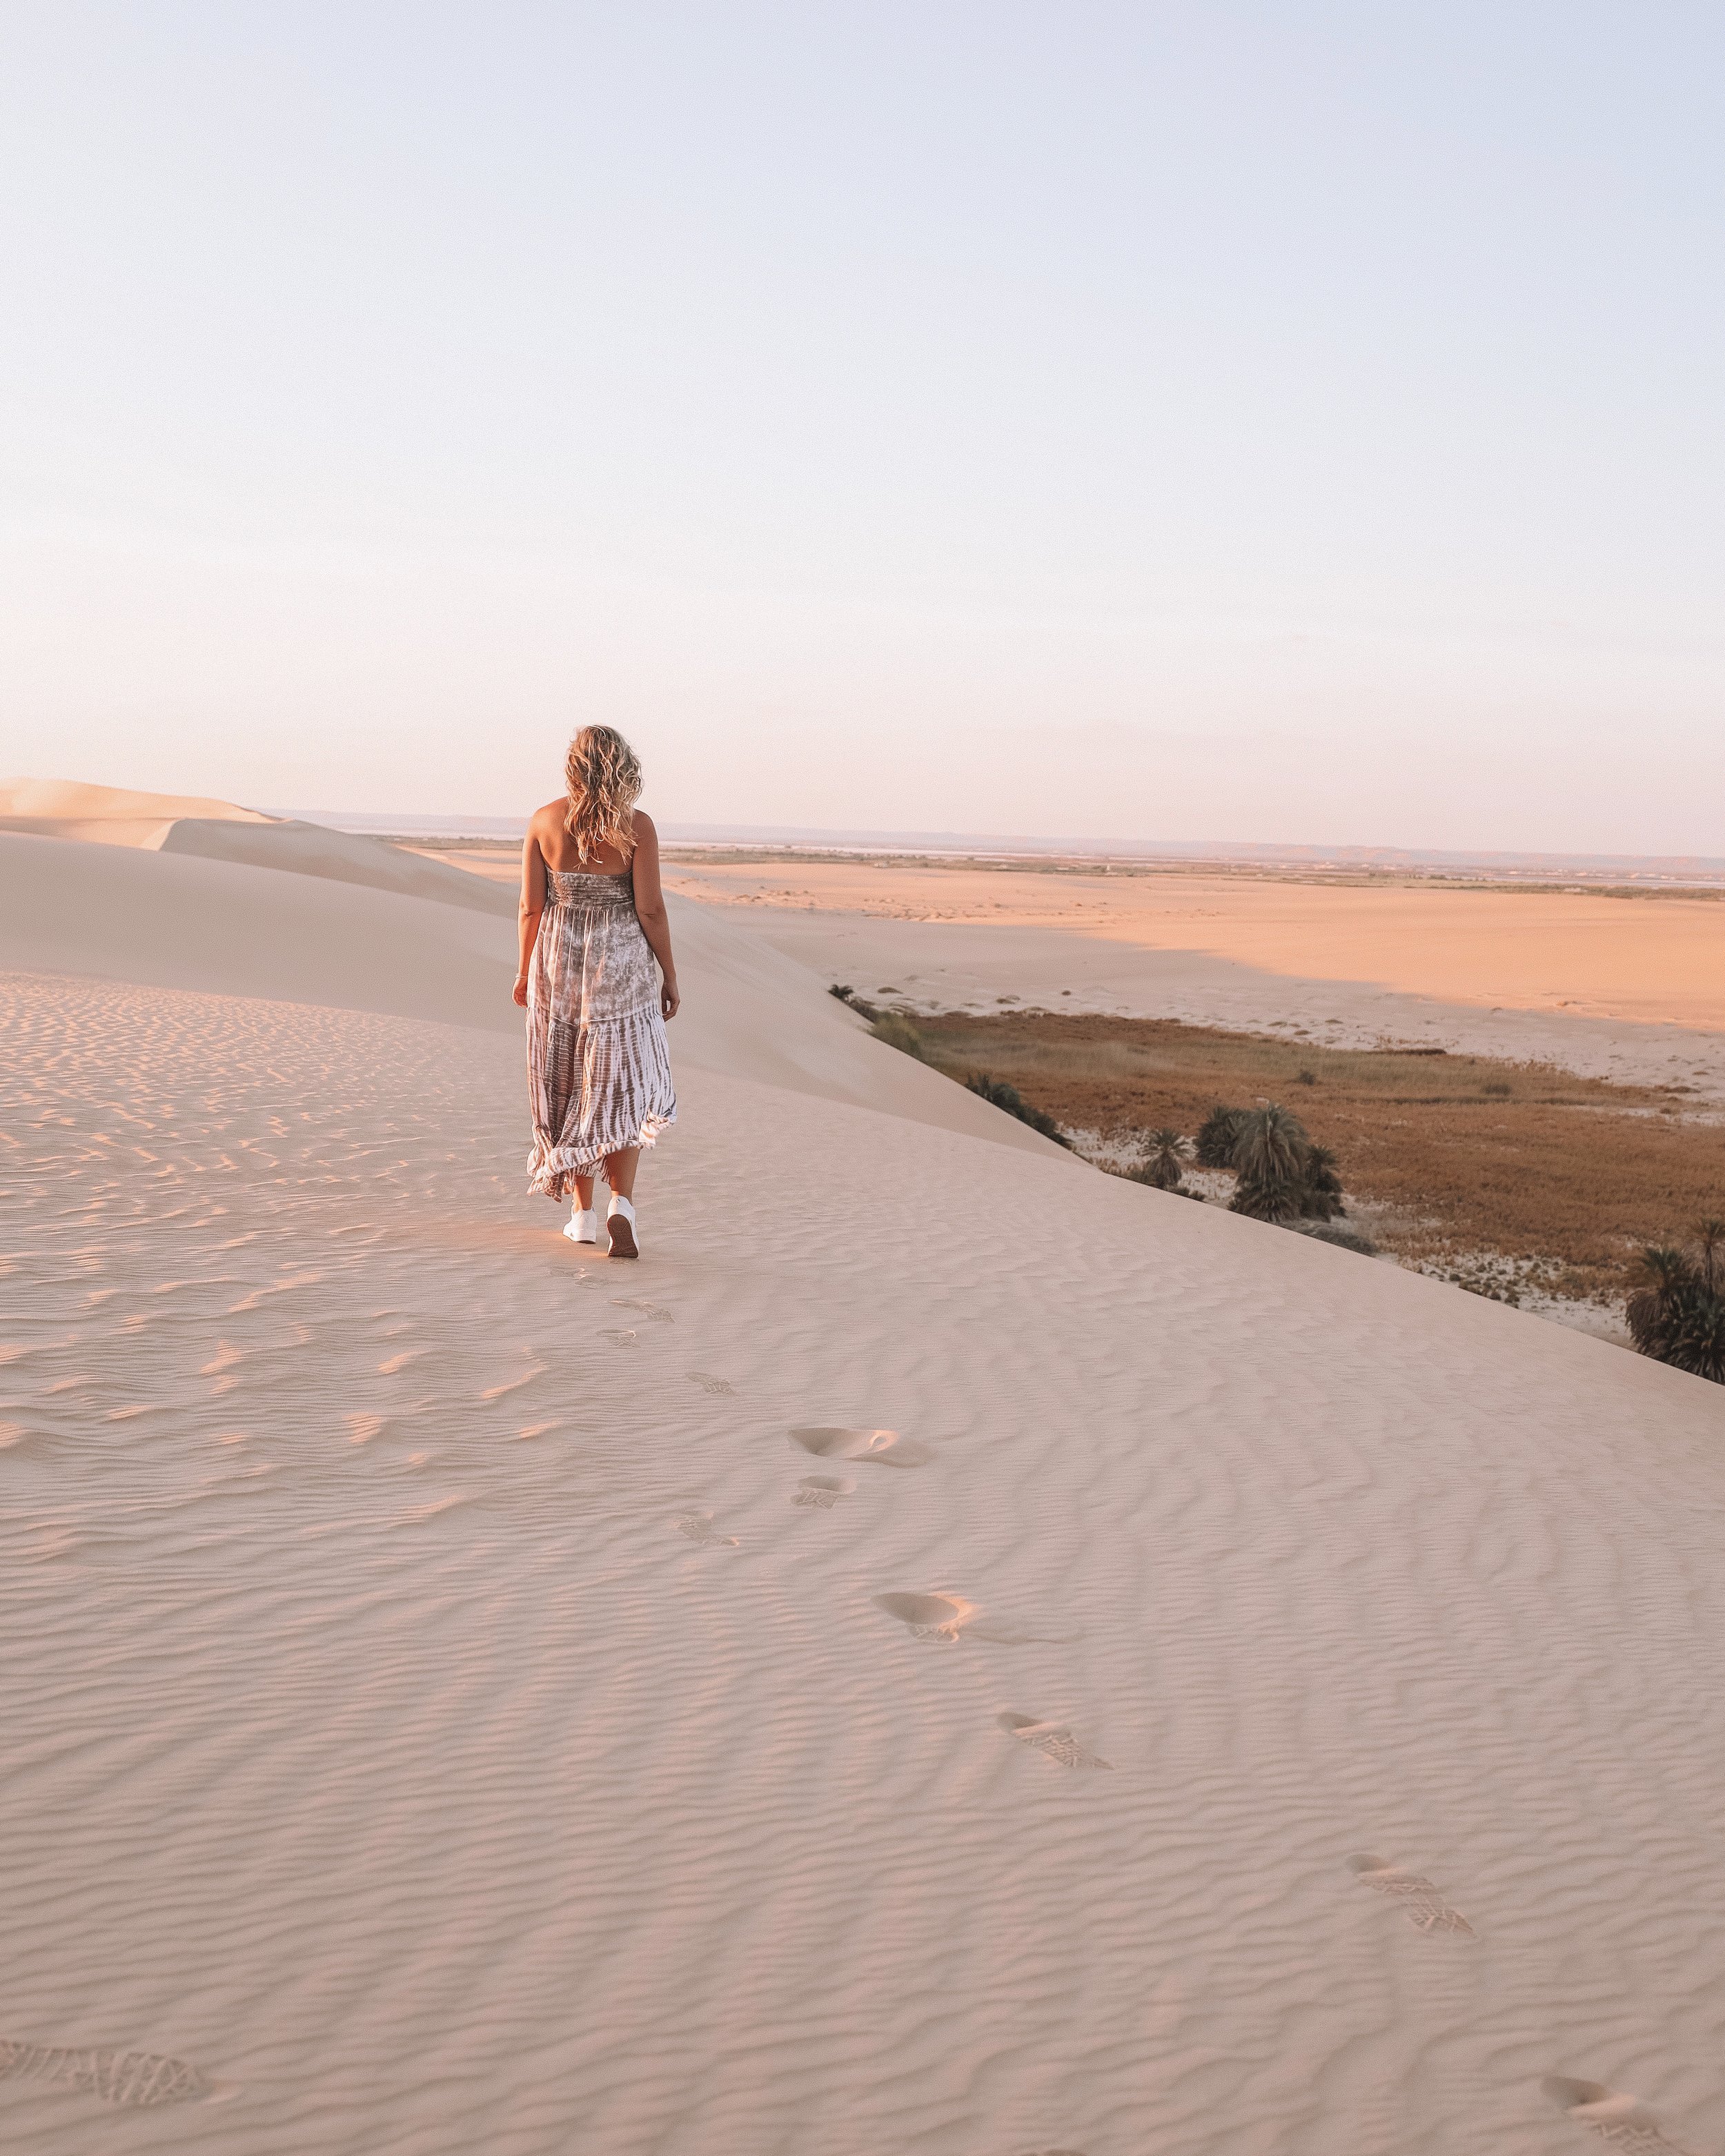 Walking in the sand dunes - Siwa Oasis - Egypt